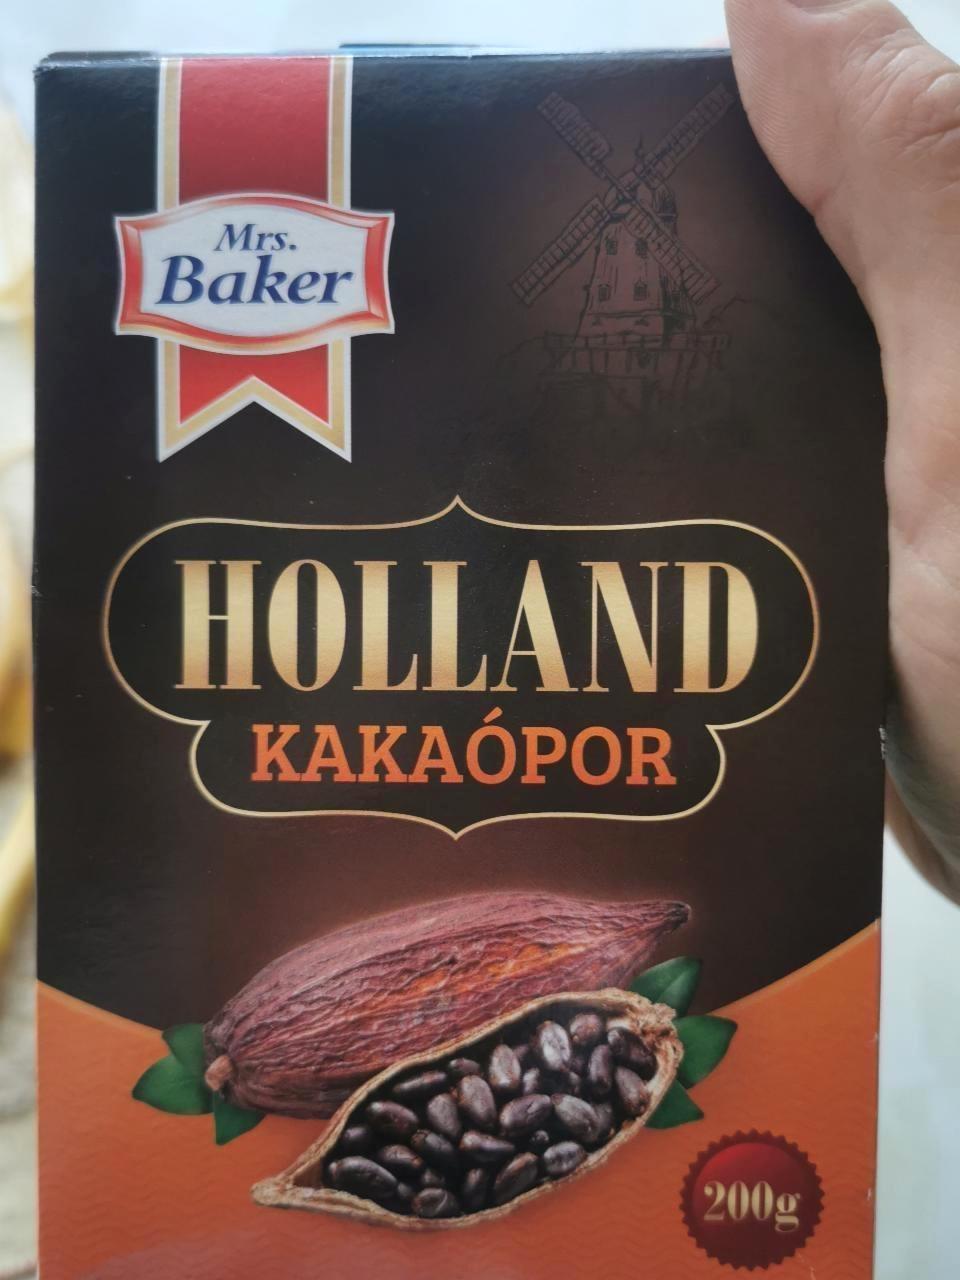 Képek - Holland kakópor Mrs. Baker